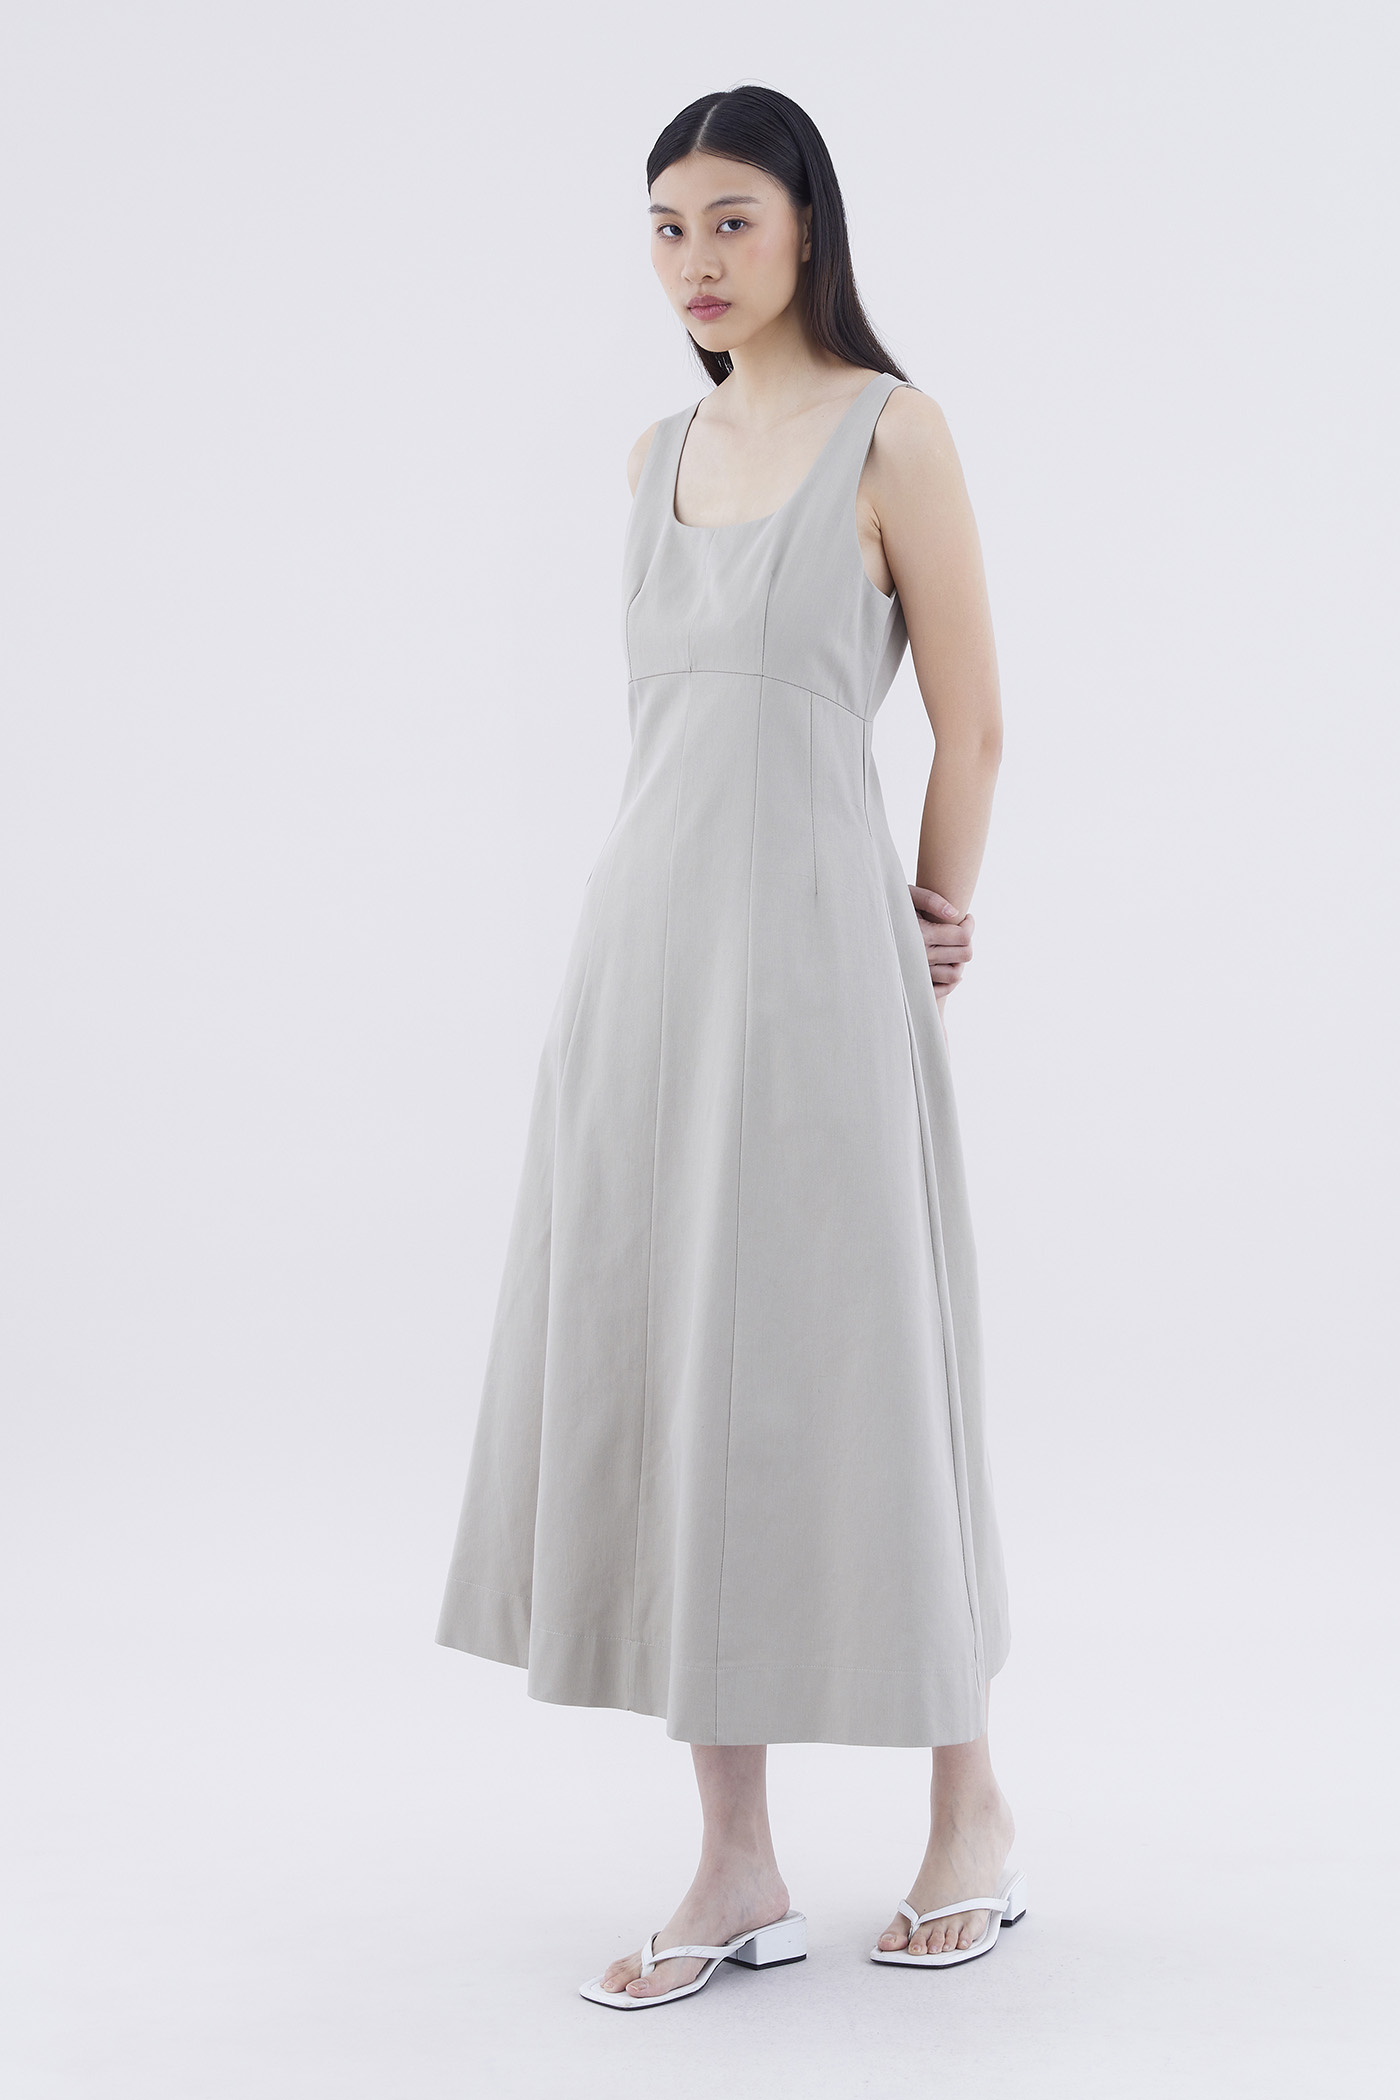 Liesel Panelled Dress | The Editor's Market